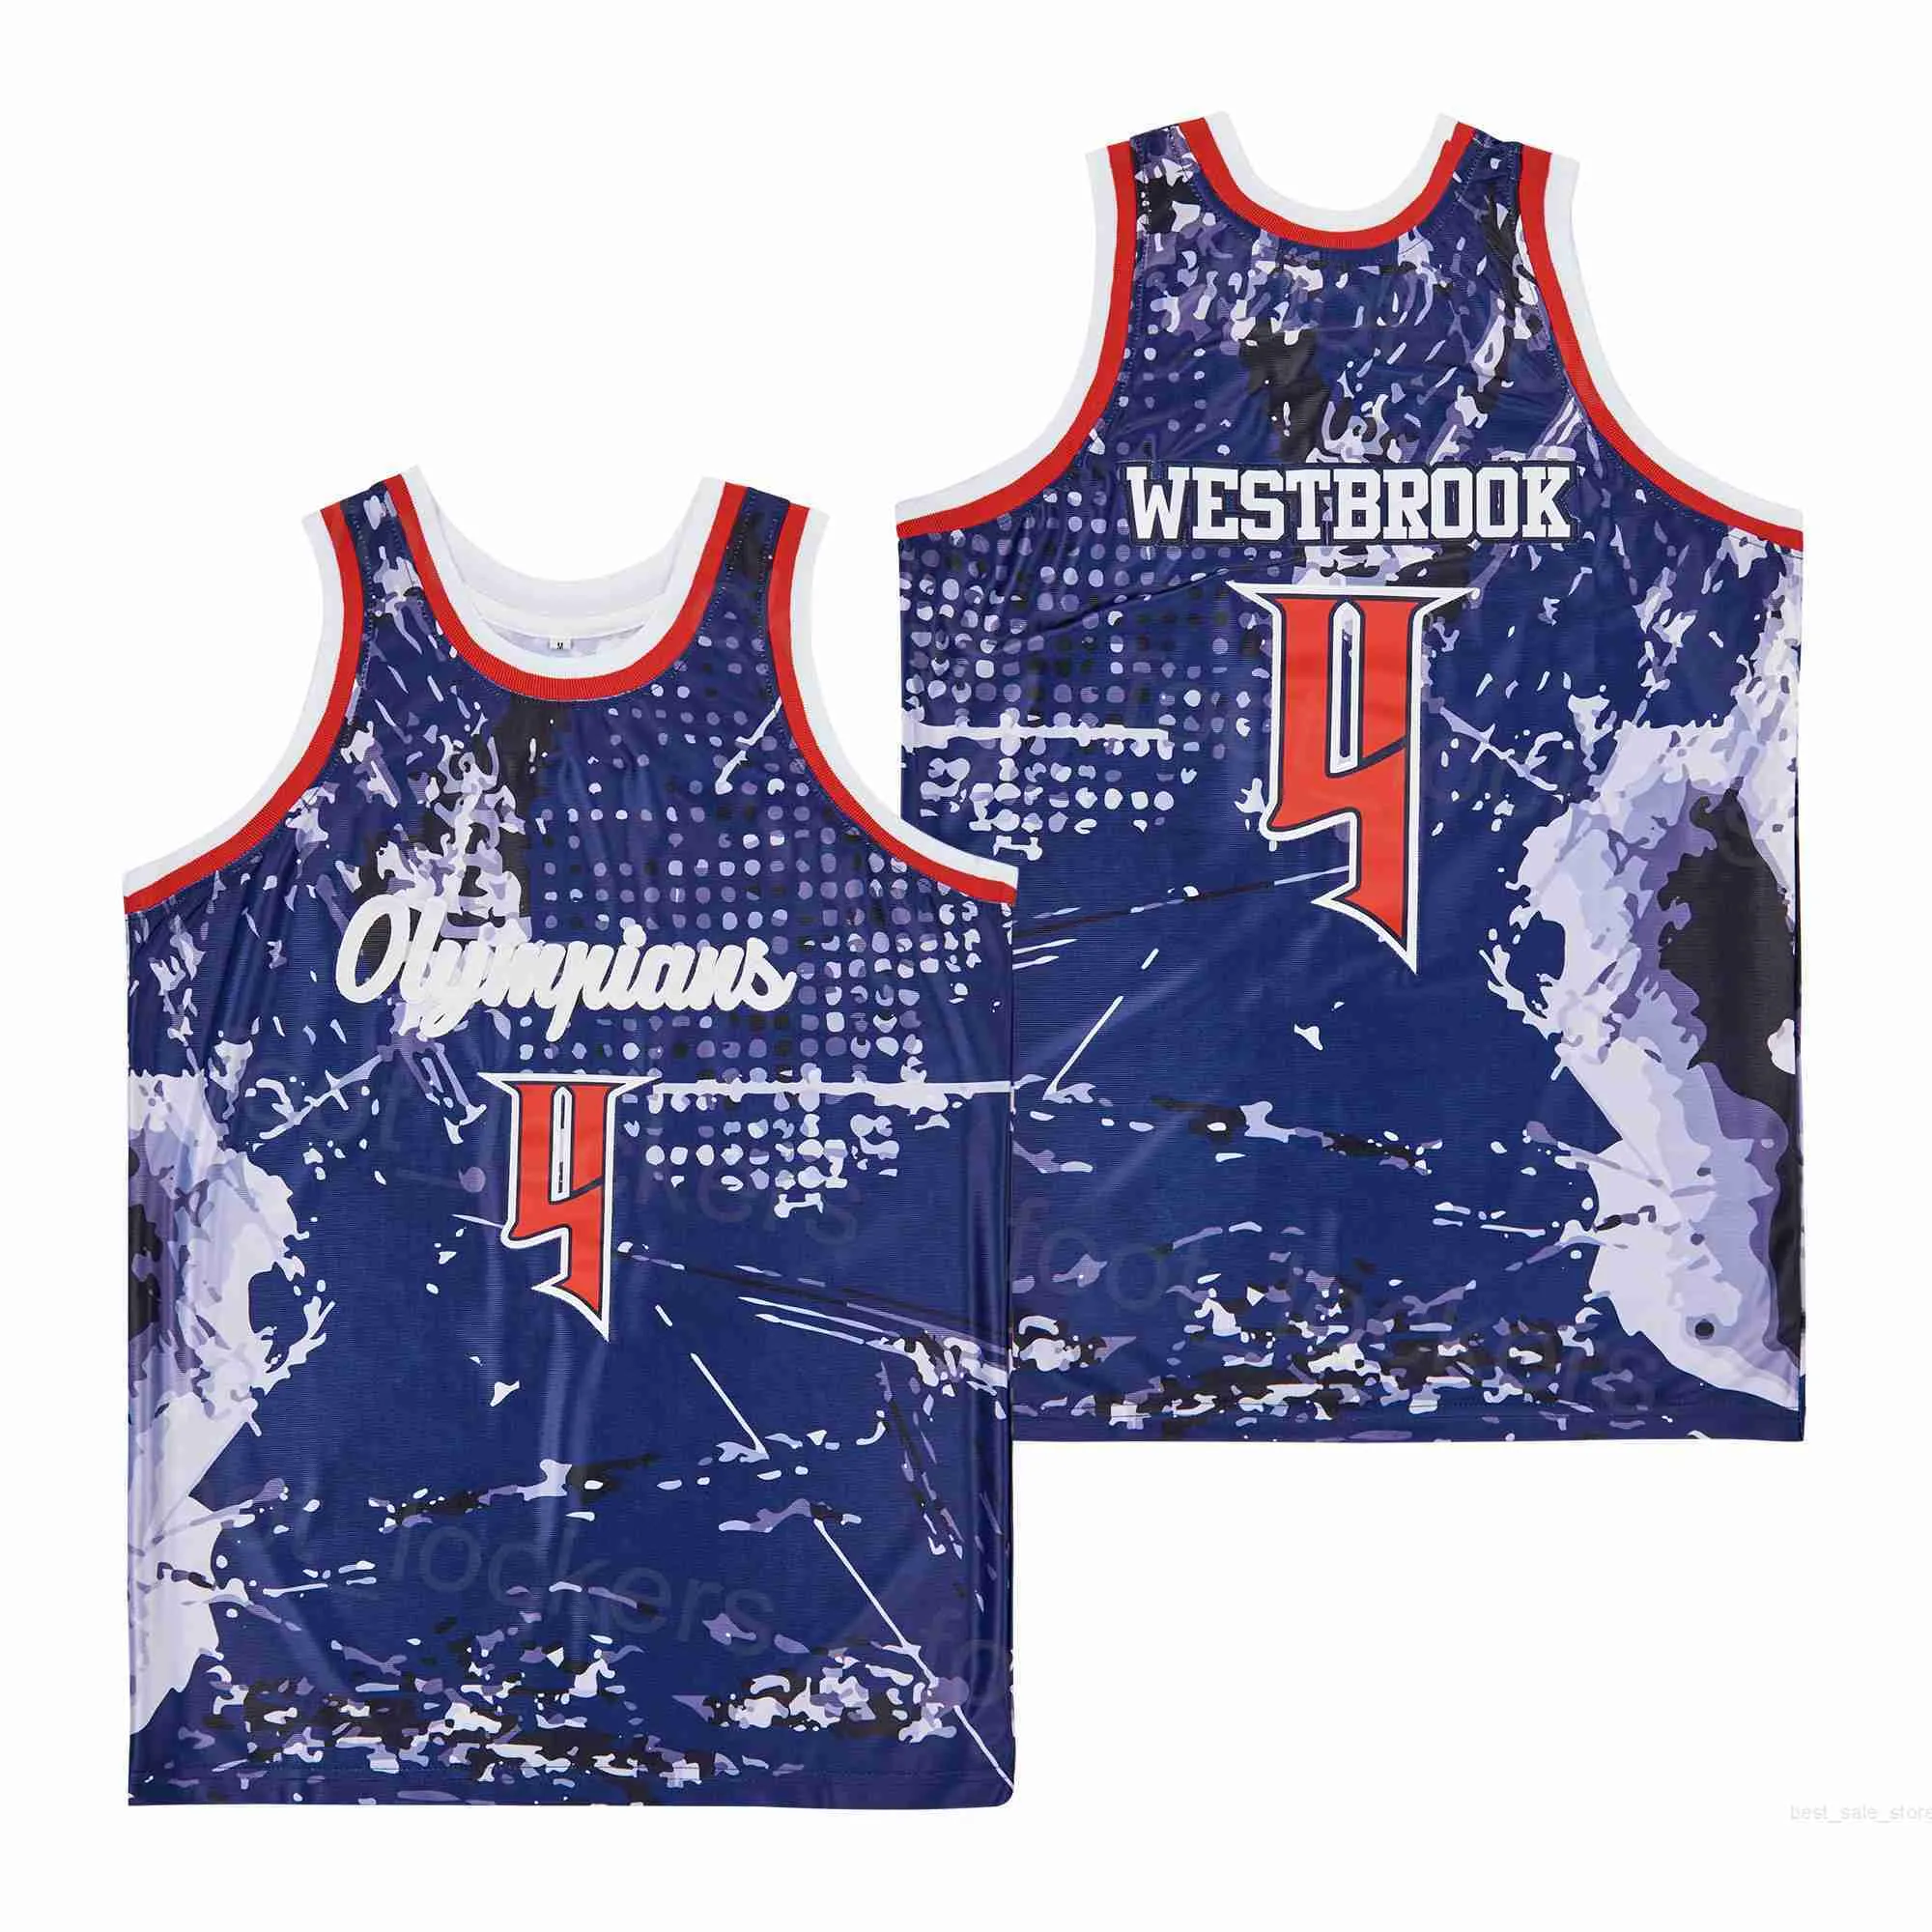 Russell Westbrook Leuzinger Jerseys 4 High School Basketball Olympians Moive University Pullover für Sportfans Genähtes ALTERNATIVES atmungsaktives blaues Team-Shirt